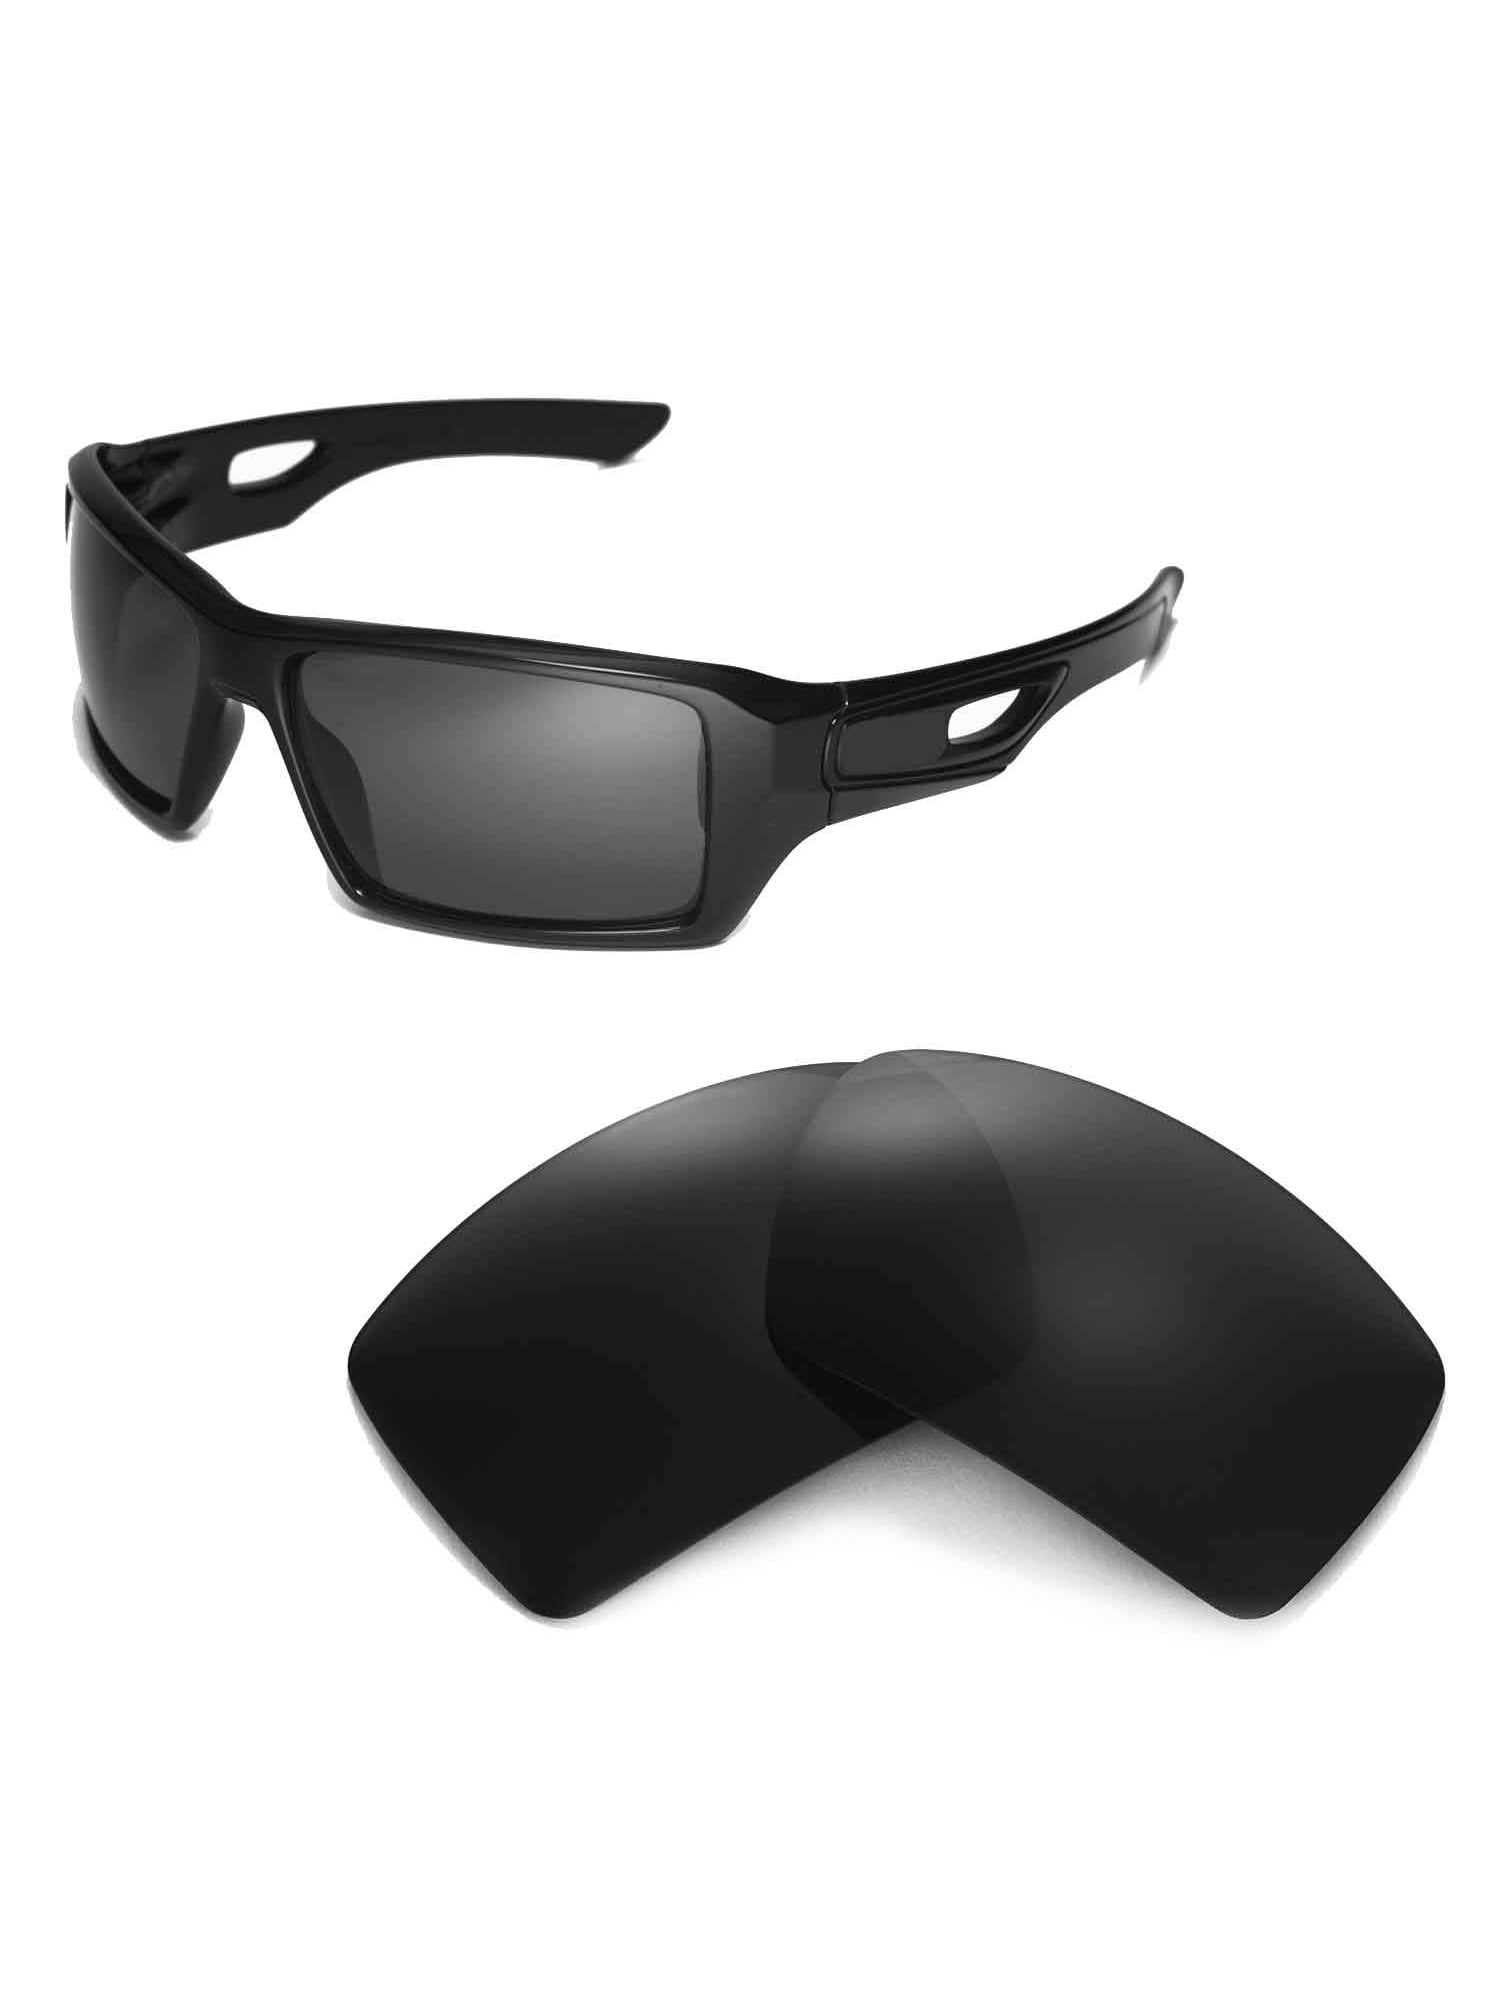 Walleva Black Replacement Lenses for Oakley Eyepatch 2 Sunglasses -  